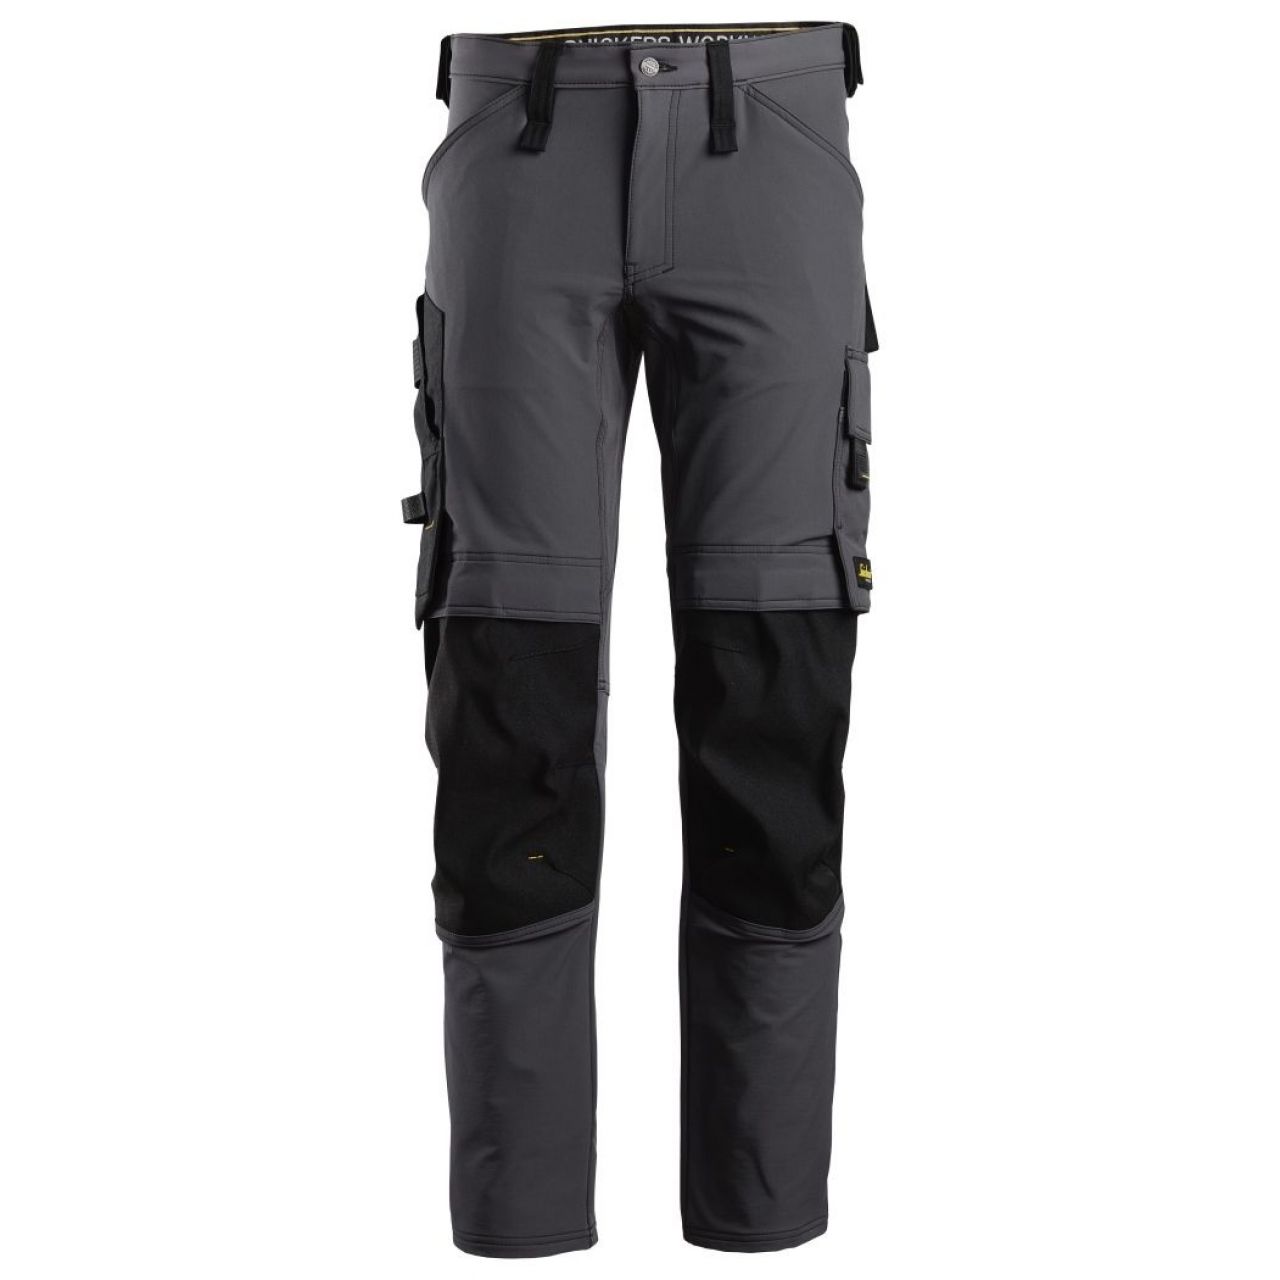 Pantalon elastico AllroundWork gris acero-negro talla 258